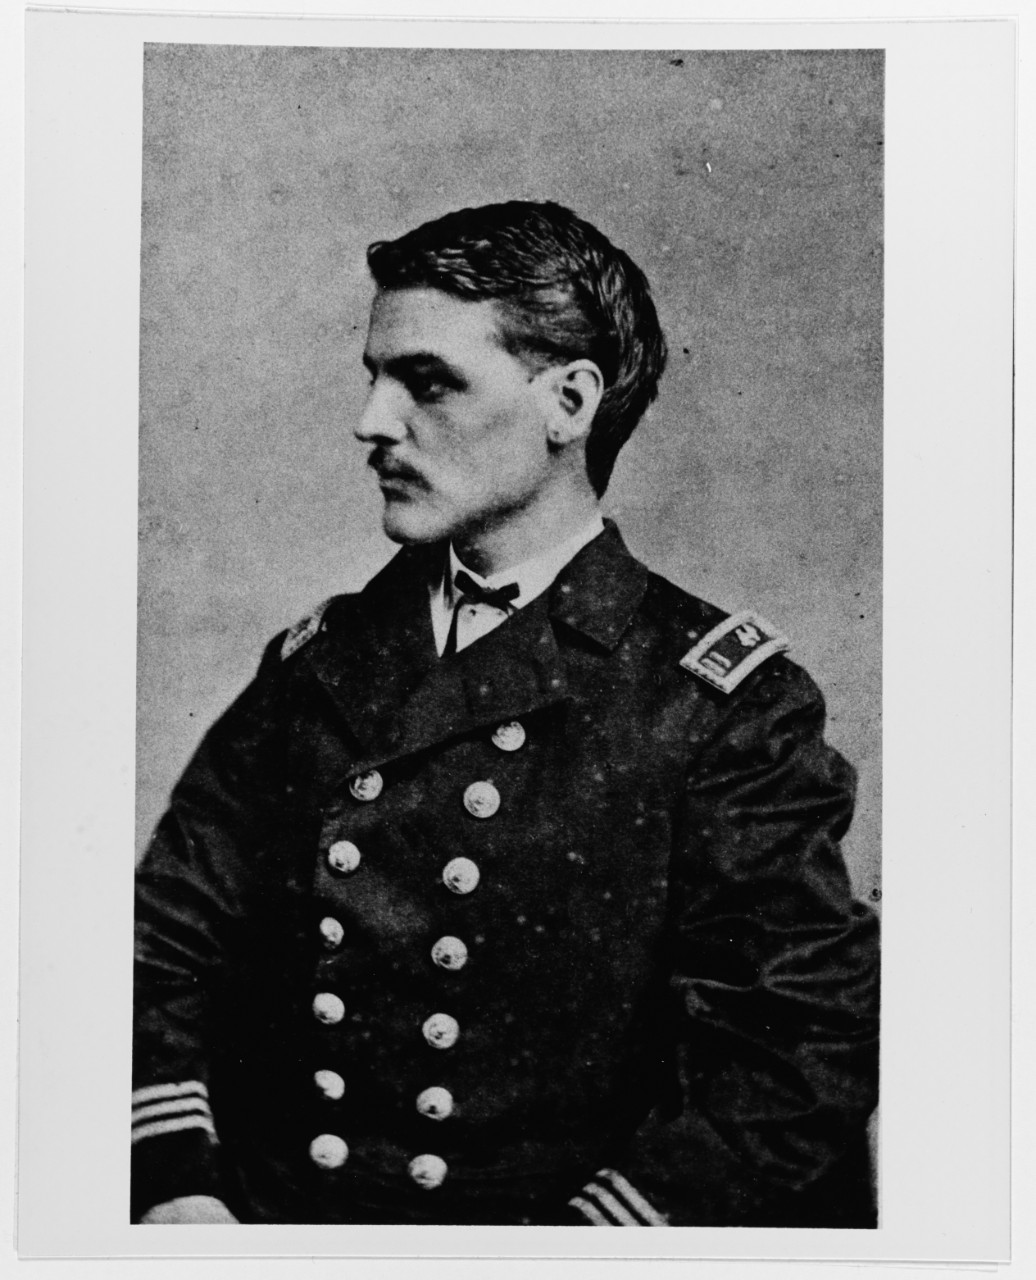 Lieutenant William W. Maclay, USN